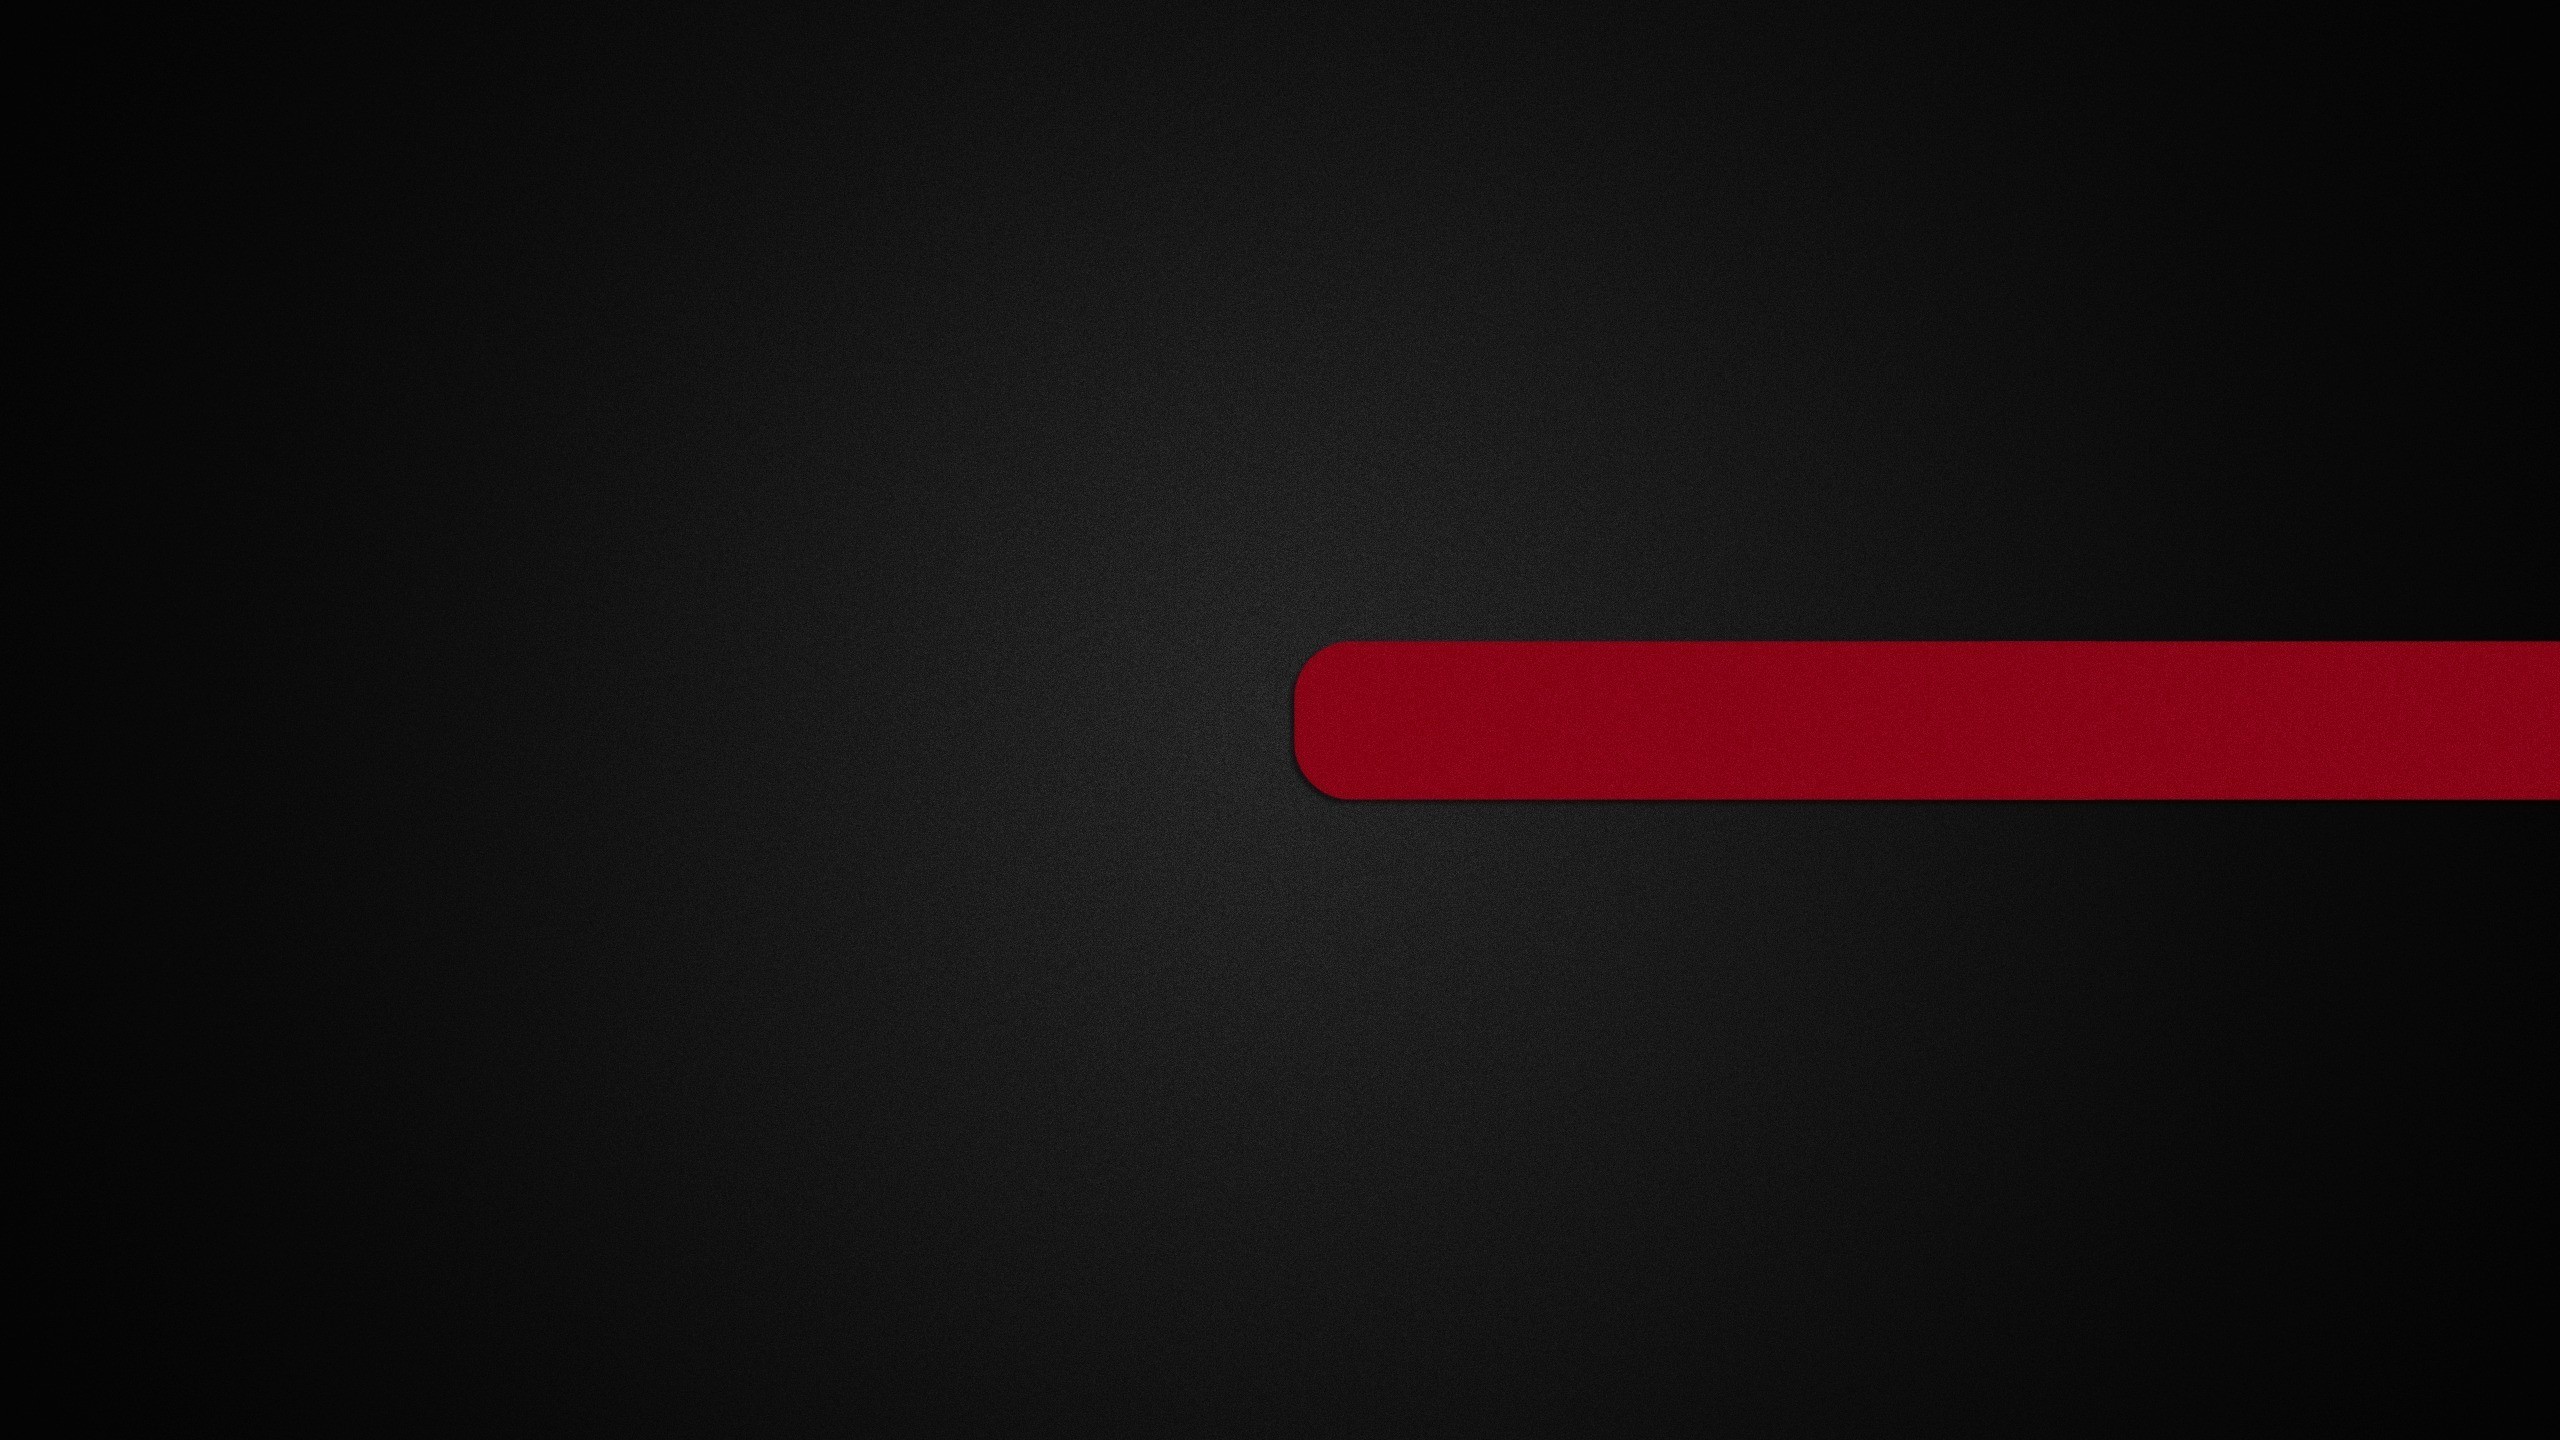 Black And Red Wallpaper For Desktop | PixelsTalk.Net